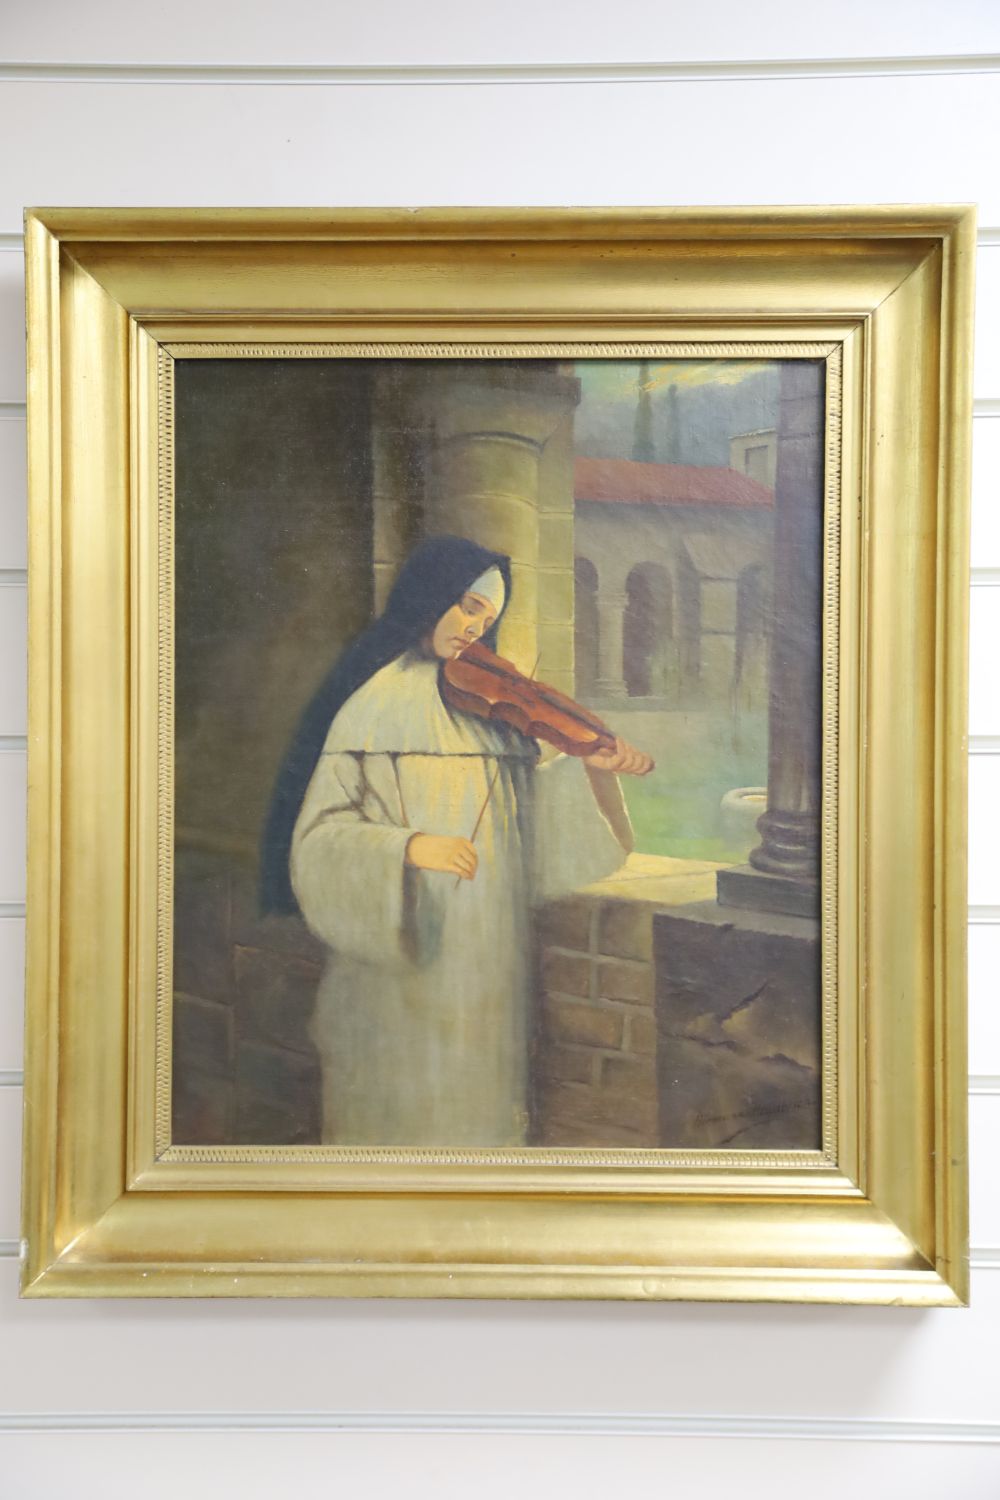 Hermann Kaulbach (1846-1909), oil on canvas, Nun playing a violin, signed, 46 x 38cm